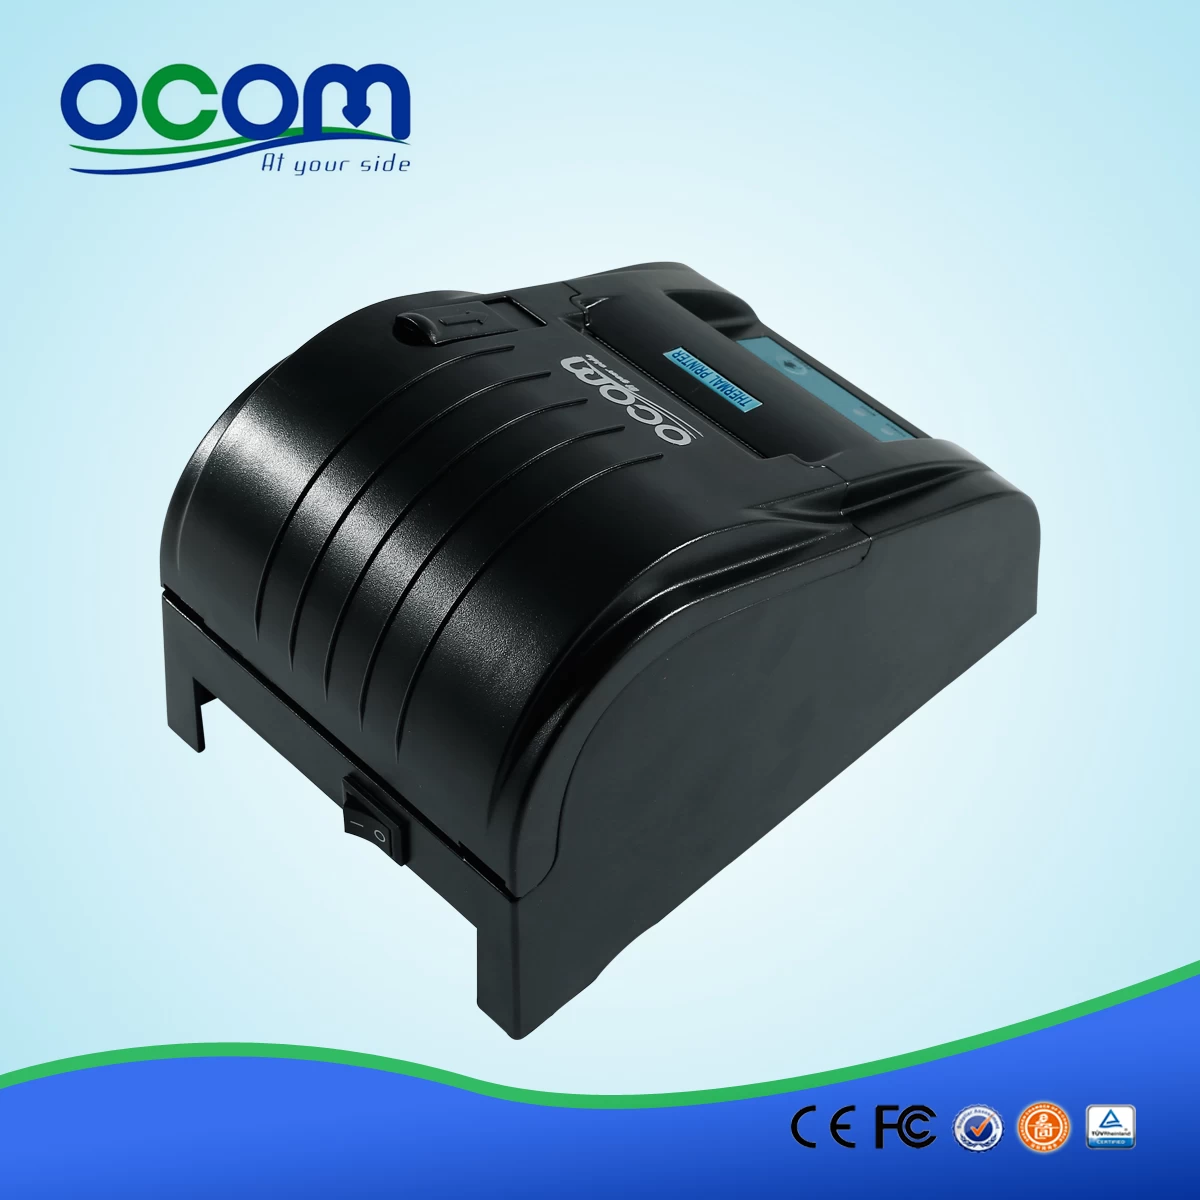 OCPP-585 2 inch lottery machine printer